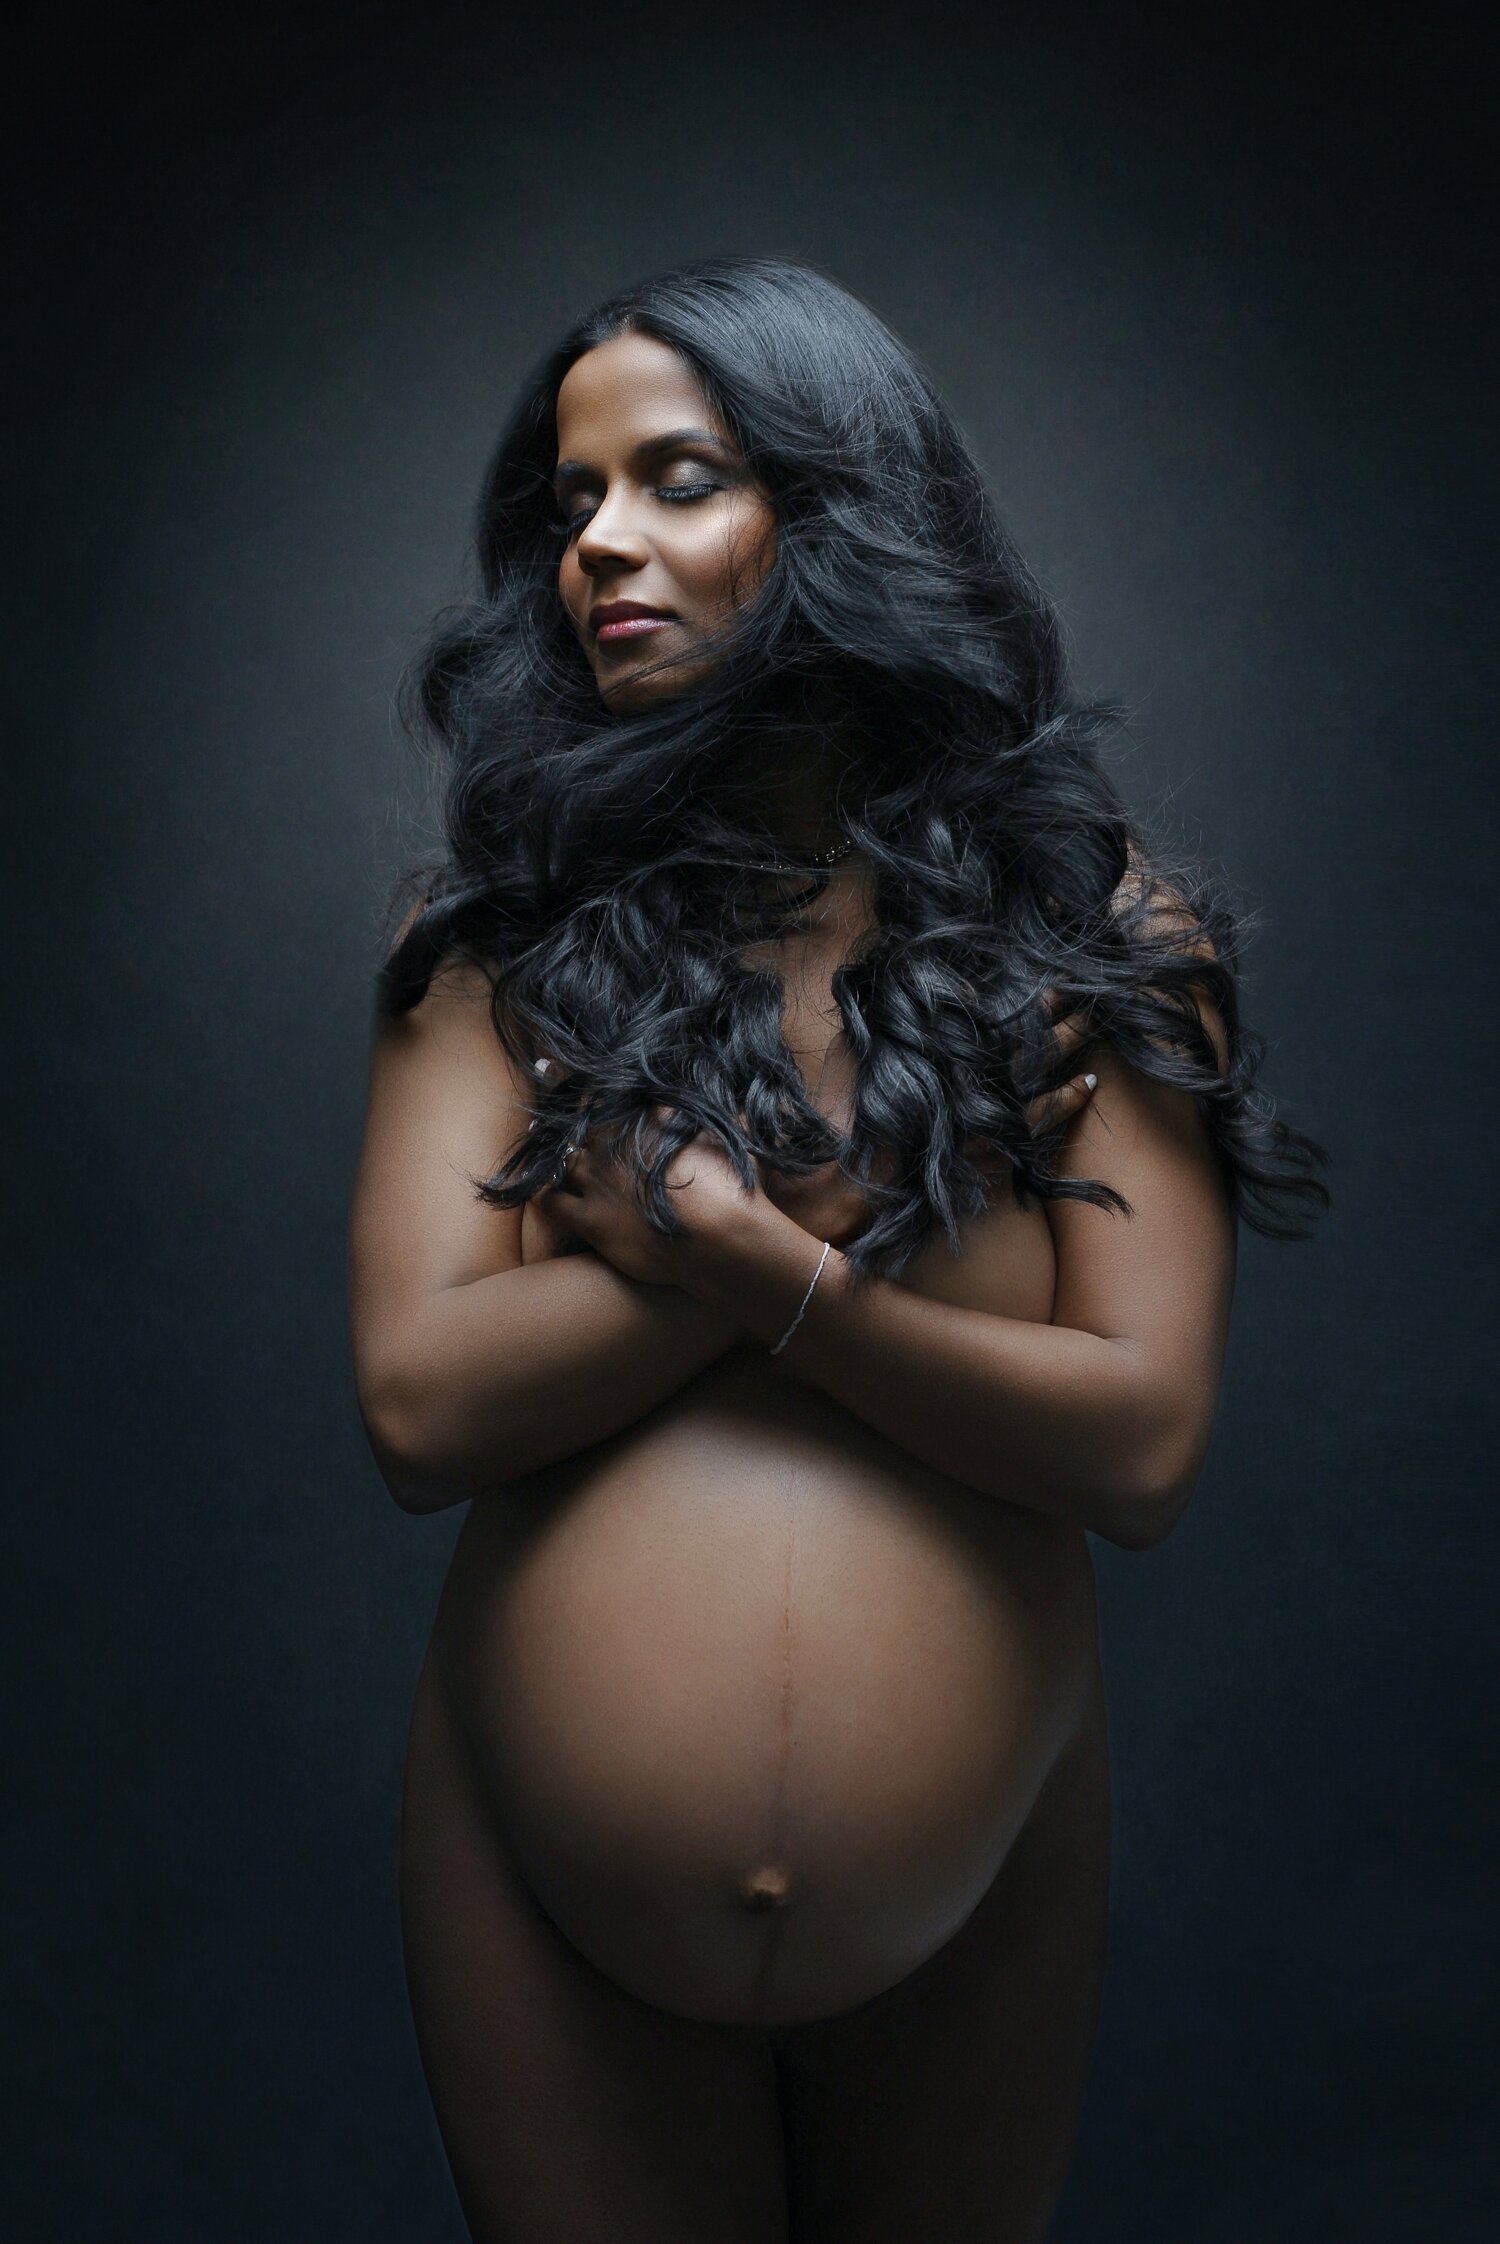 creative-pregnancy-photos-oakville-toronto-livepixels.jpg